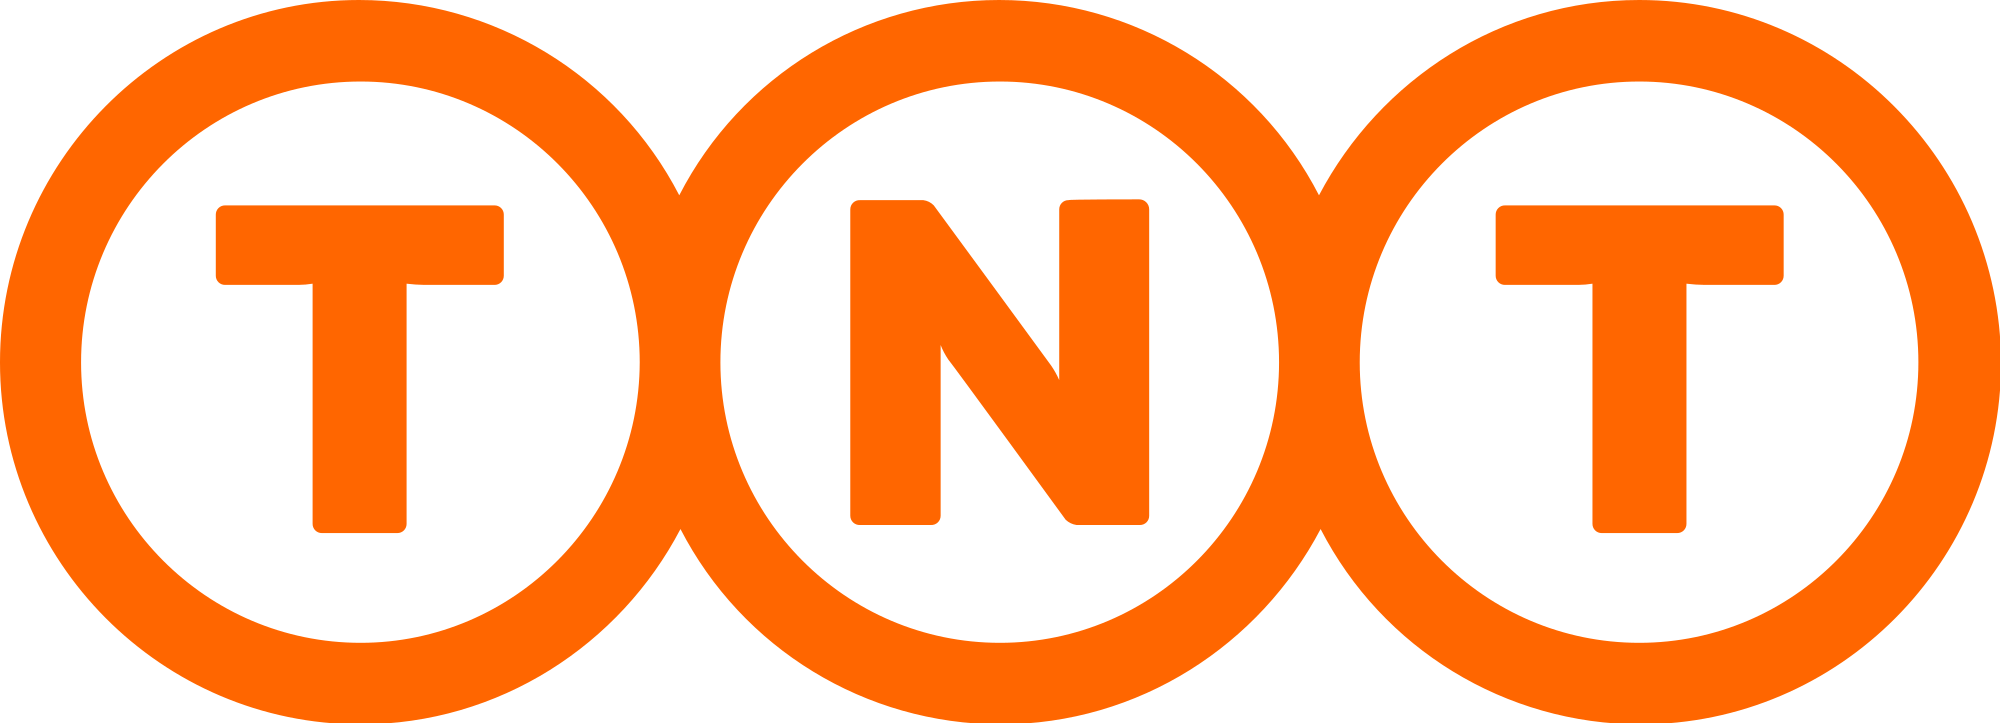 https://upload.wikimedia.org/wikipedia/commons/thumb/c/c9/TNT_Express_Logo.svg/2000px-TNT_Express_Logo.svg.png